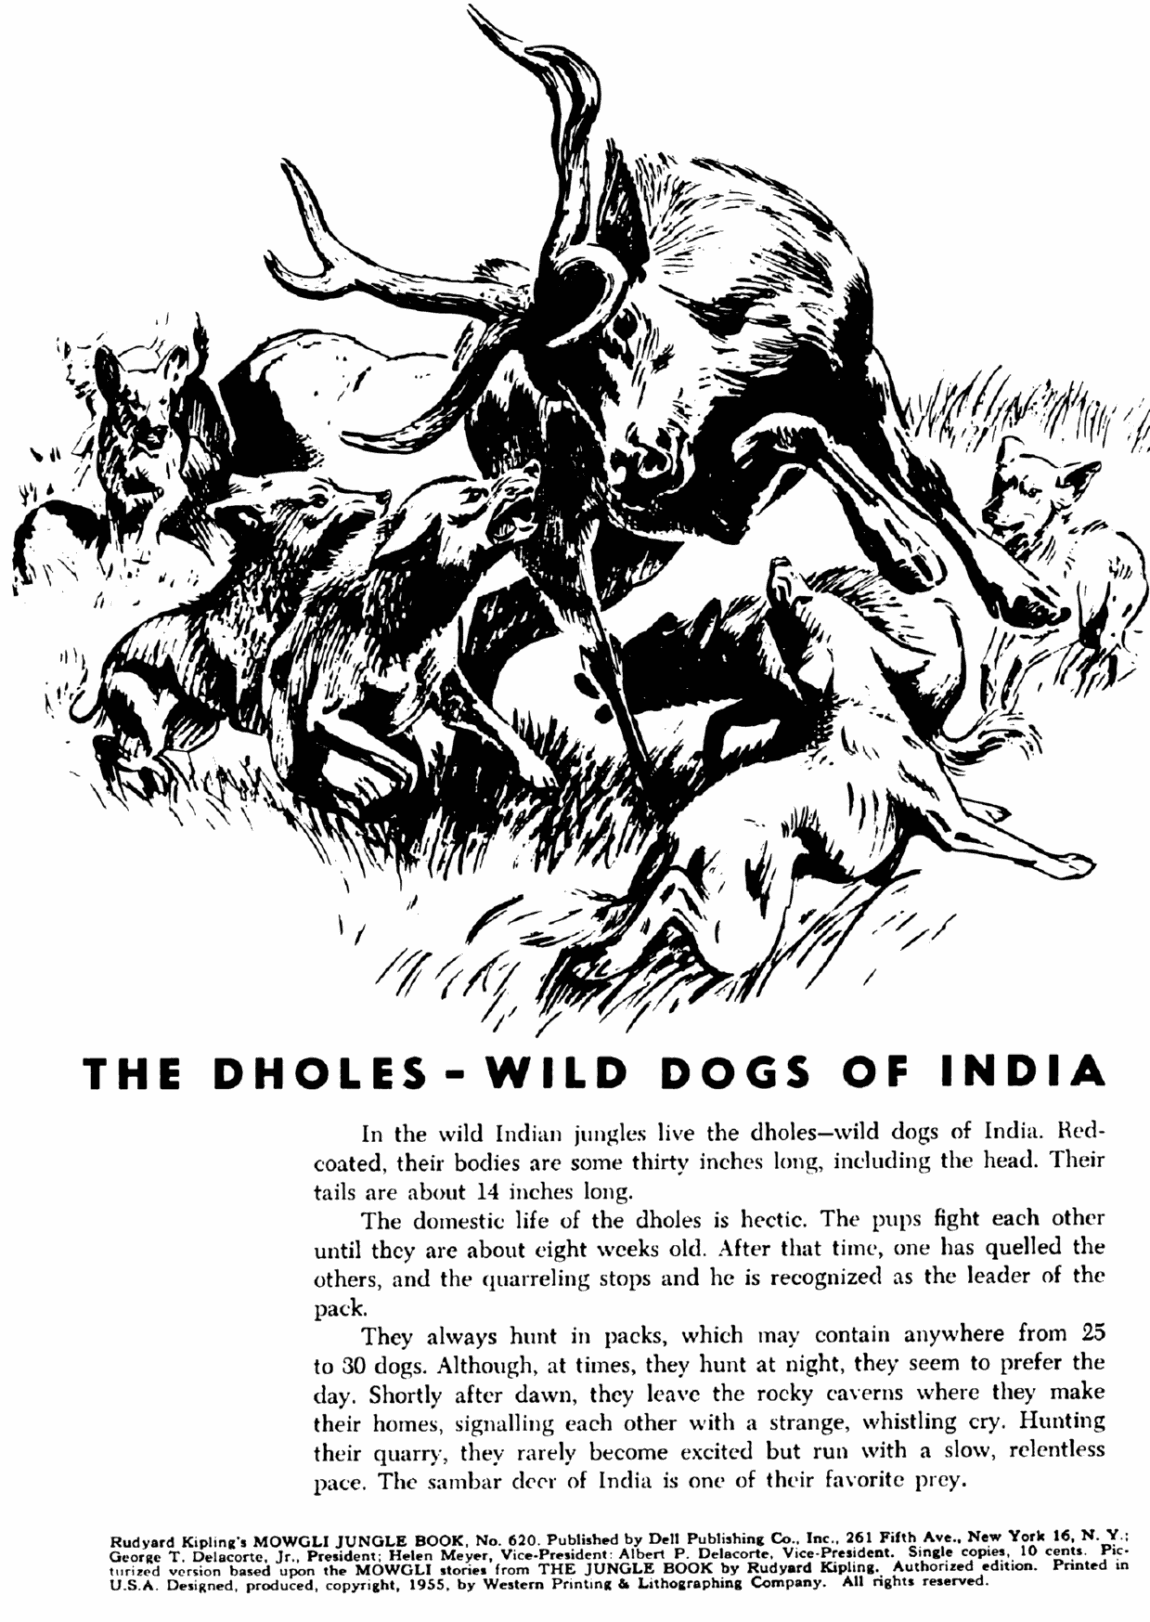 Rudyard Kipling's Mowgli: Jungle Book #3 frontispiece: The Dholes